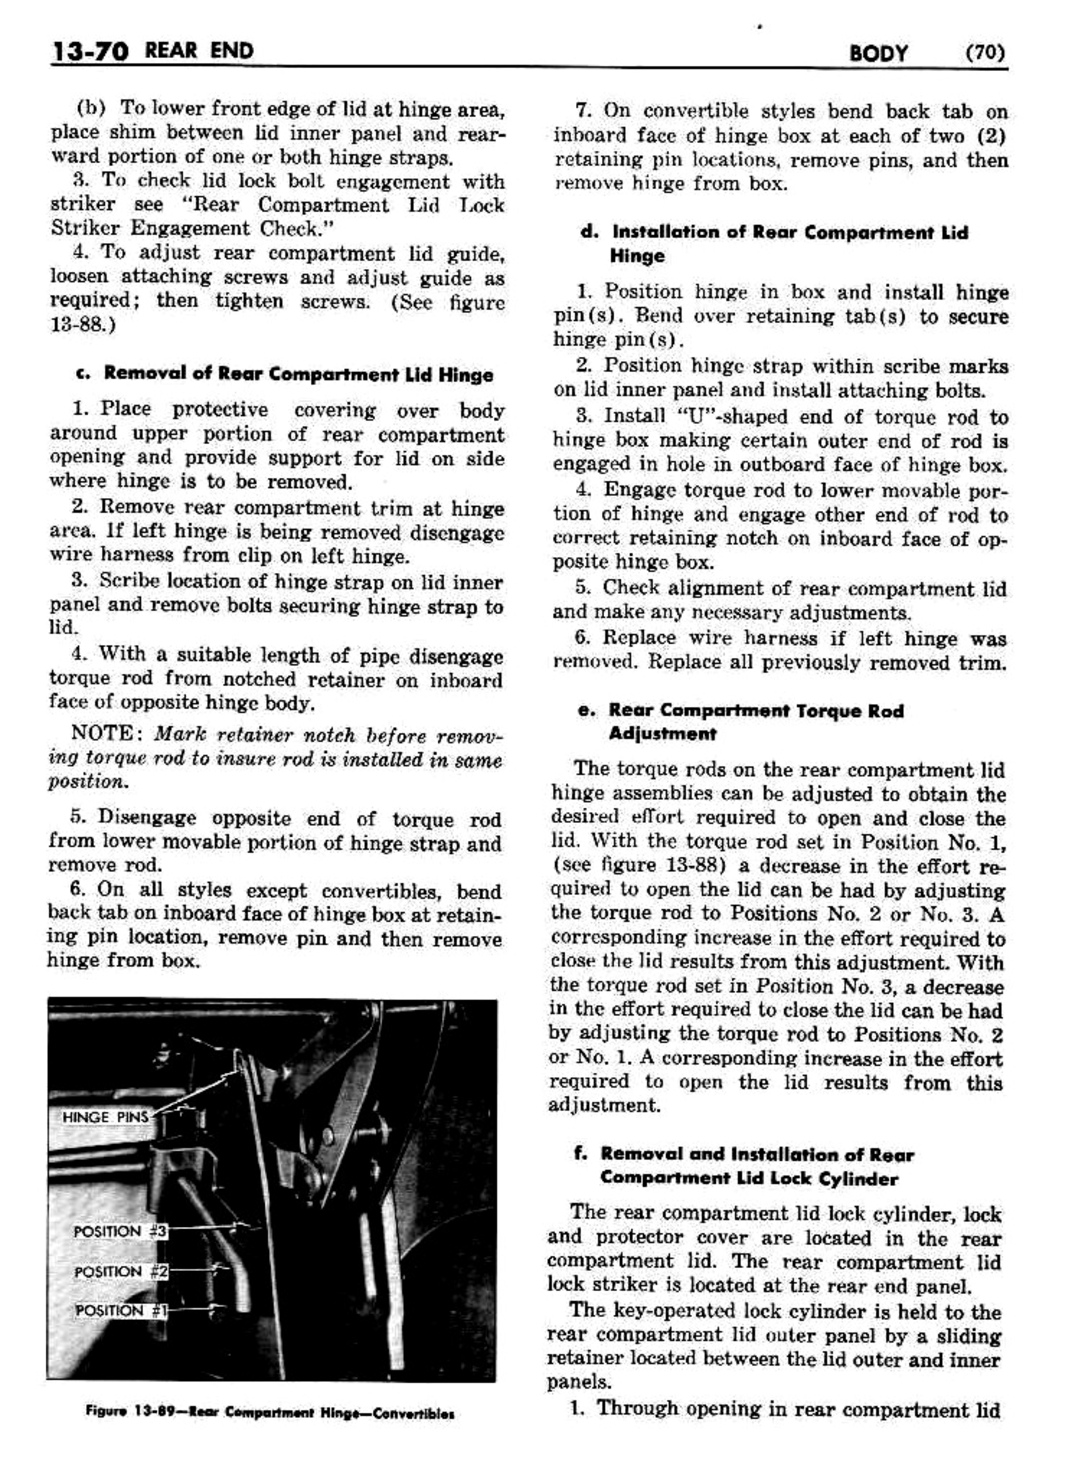 n_1958 Buick Body Service Manual-071-071.jpg